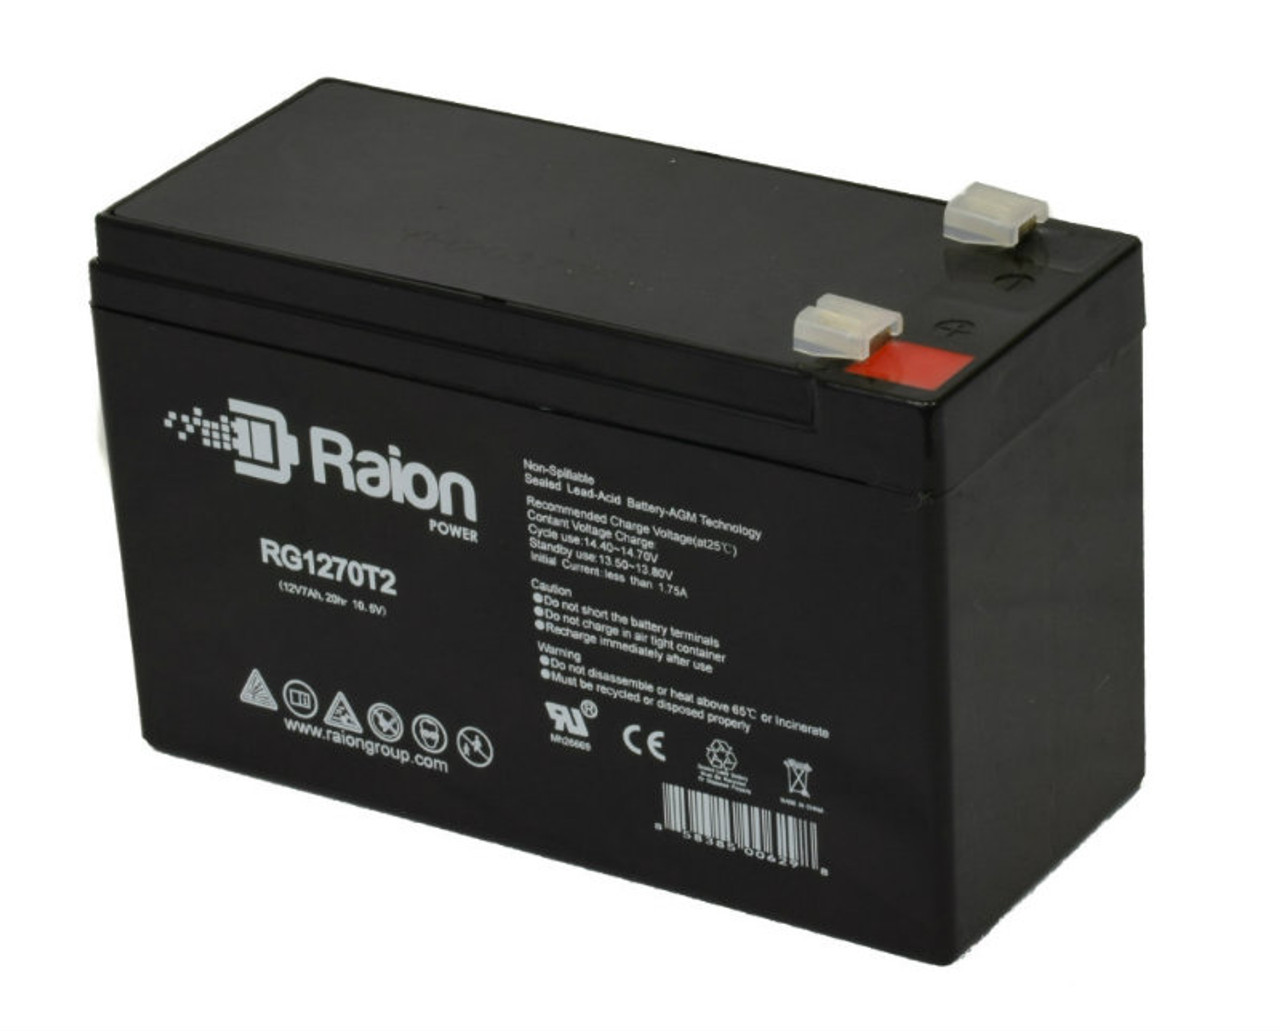 Raion Power Replacement 12V 7Ah RG1270T1 Fire Alarm Battery for Altronix AL62424C